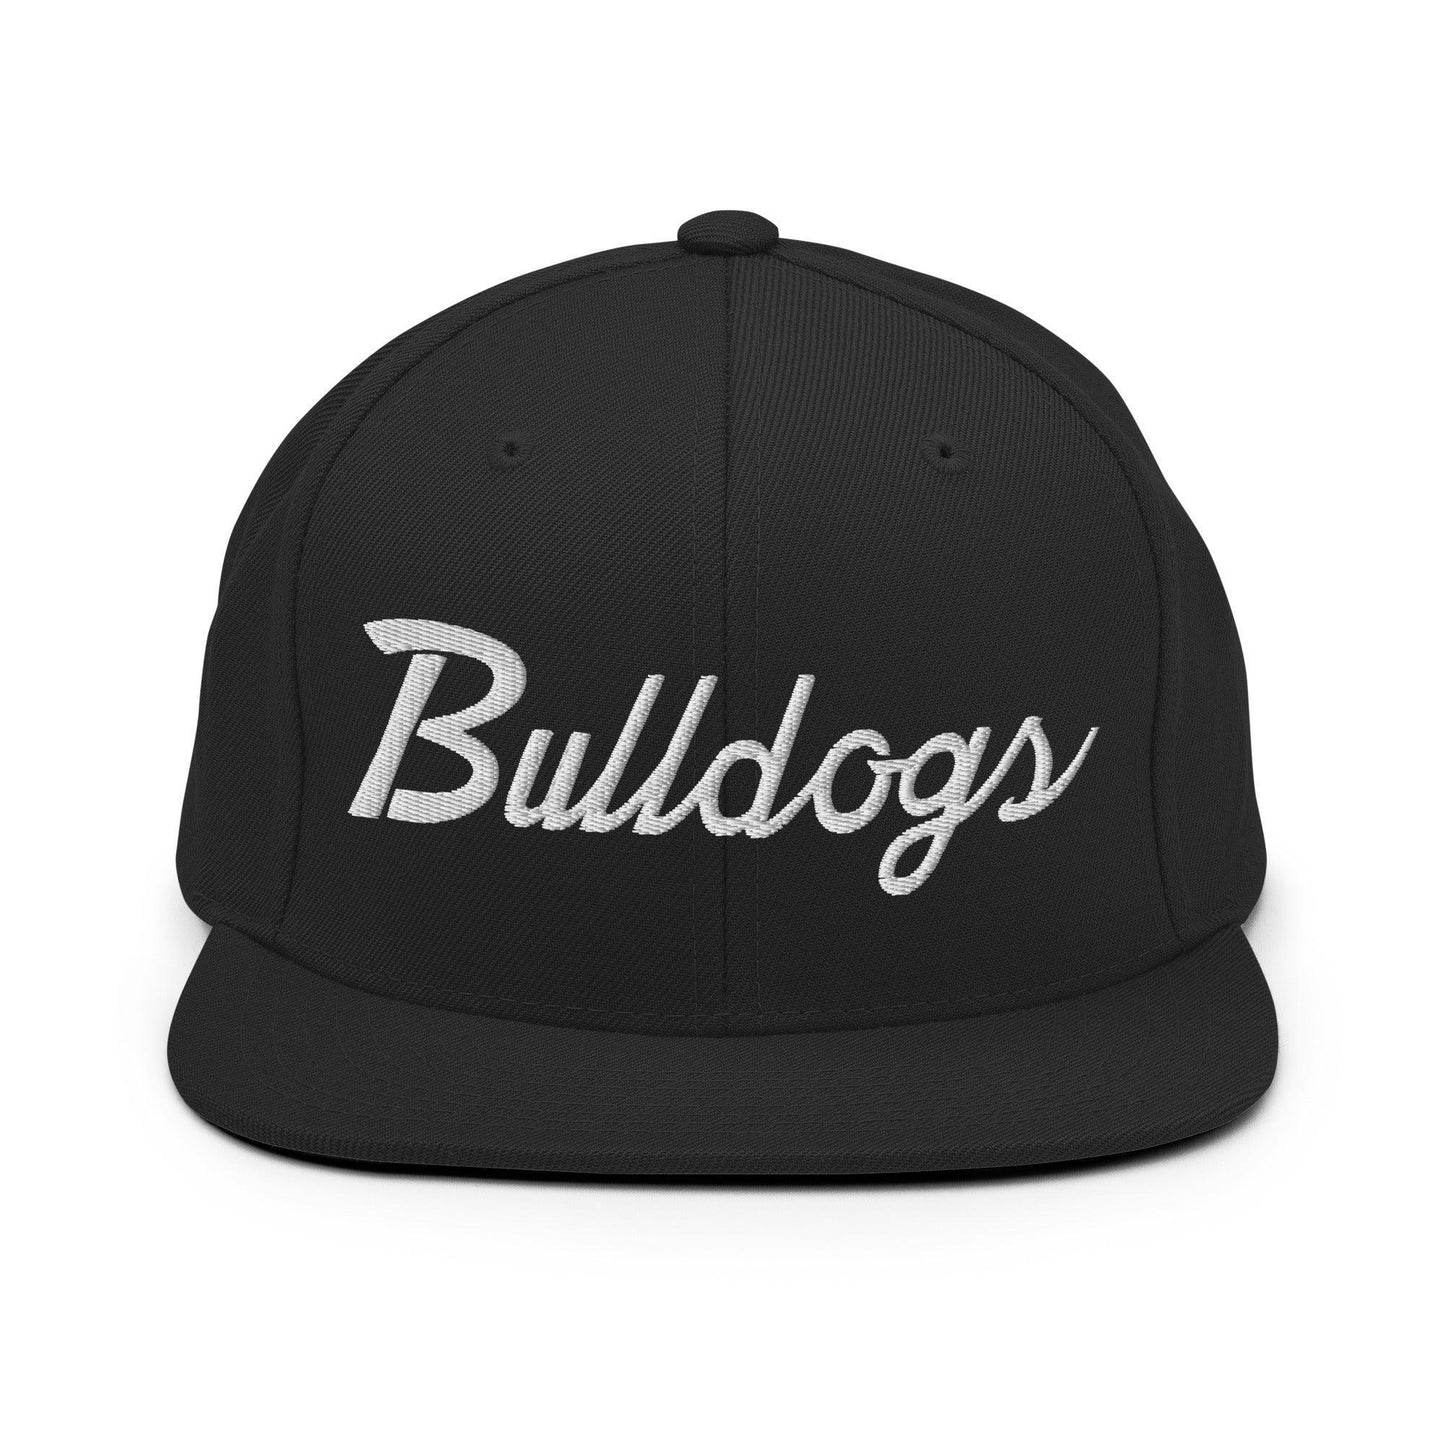 Bulldogs School Mascot Script Snapback Hat Black